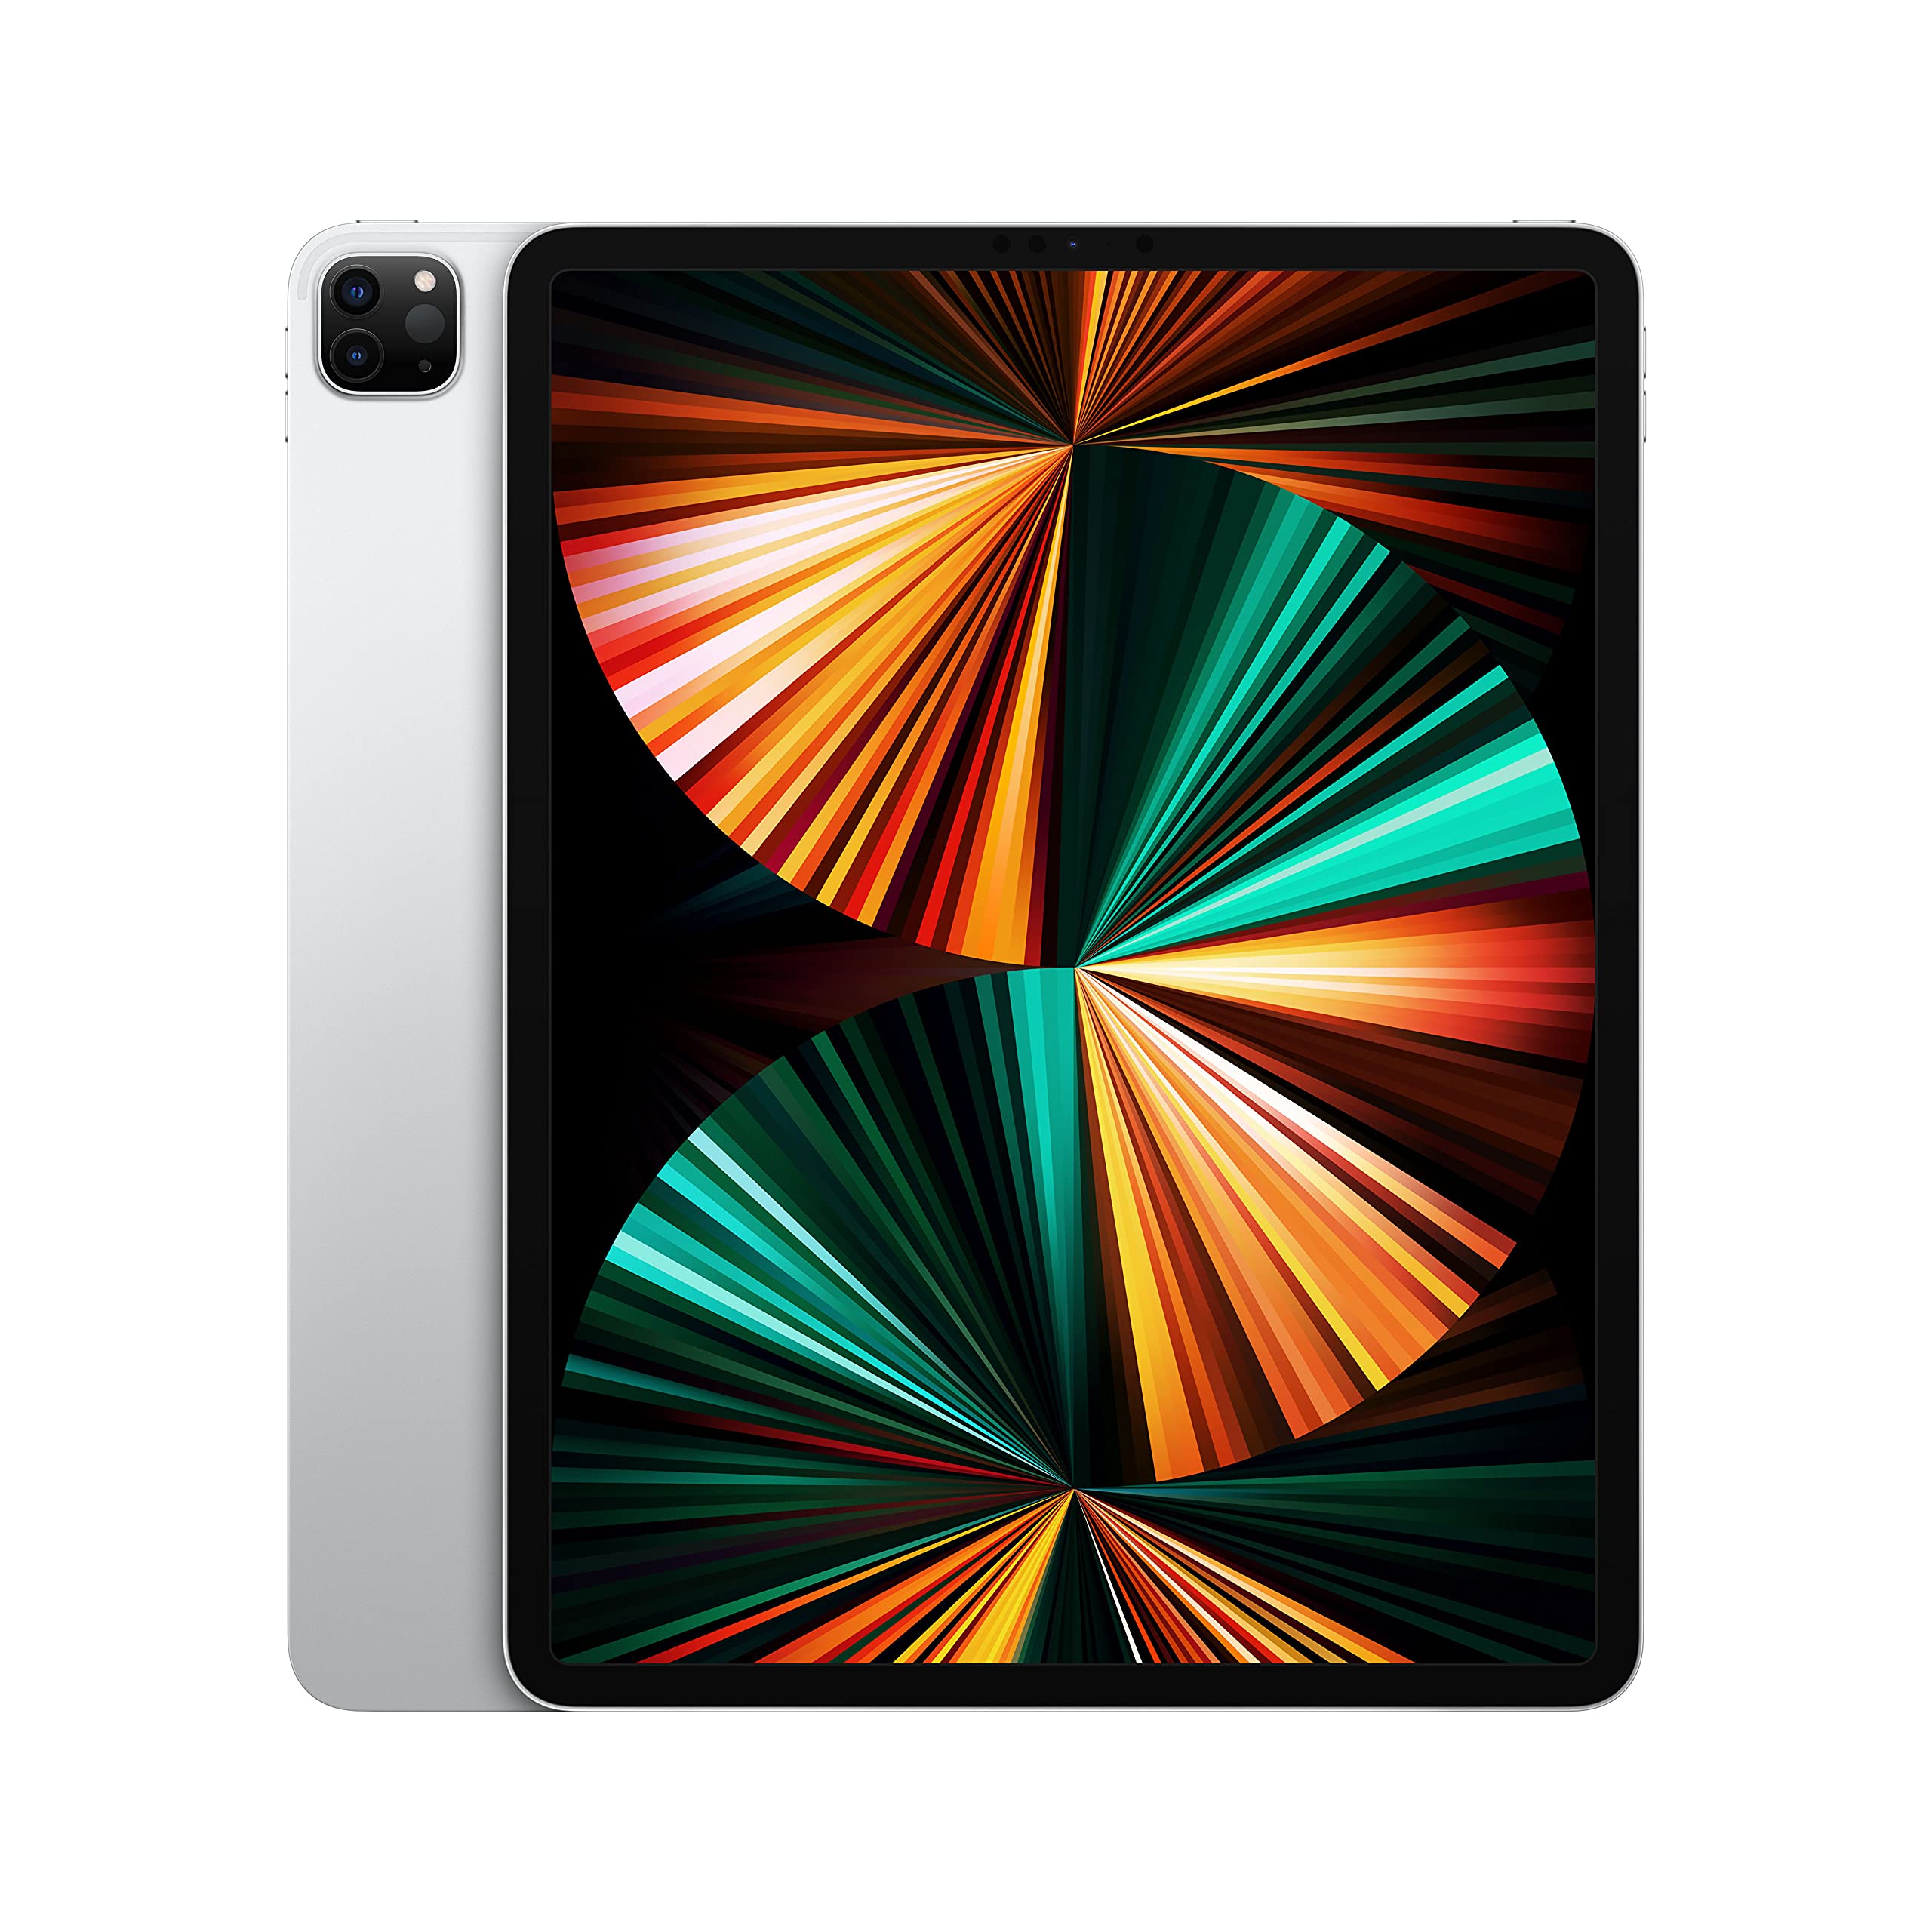 2021 Apple iPad Pro (12.9-inch, Wi-Fi, 128GB) - Silver (5th Generation)